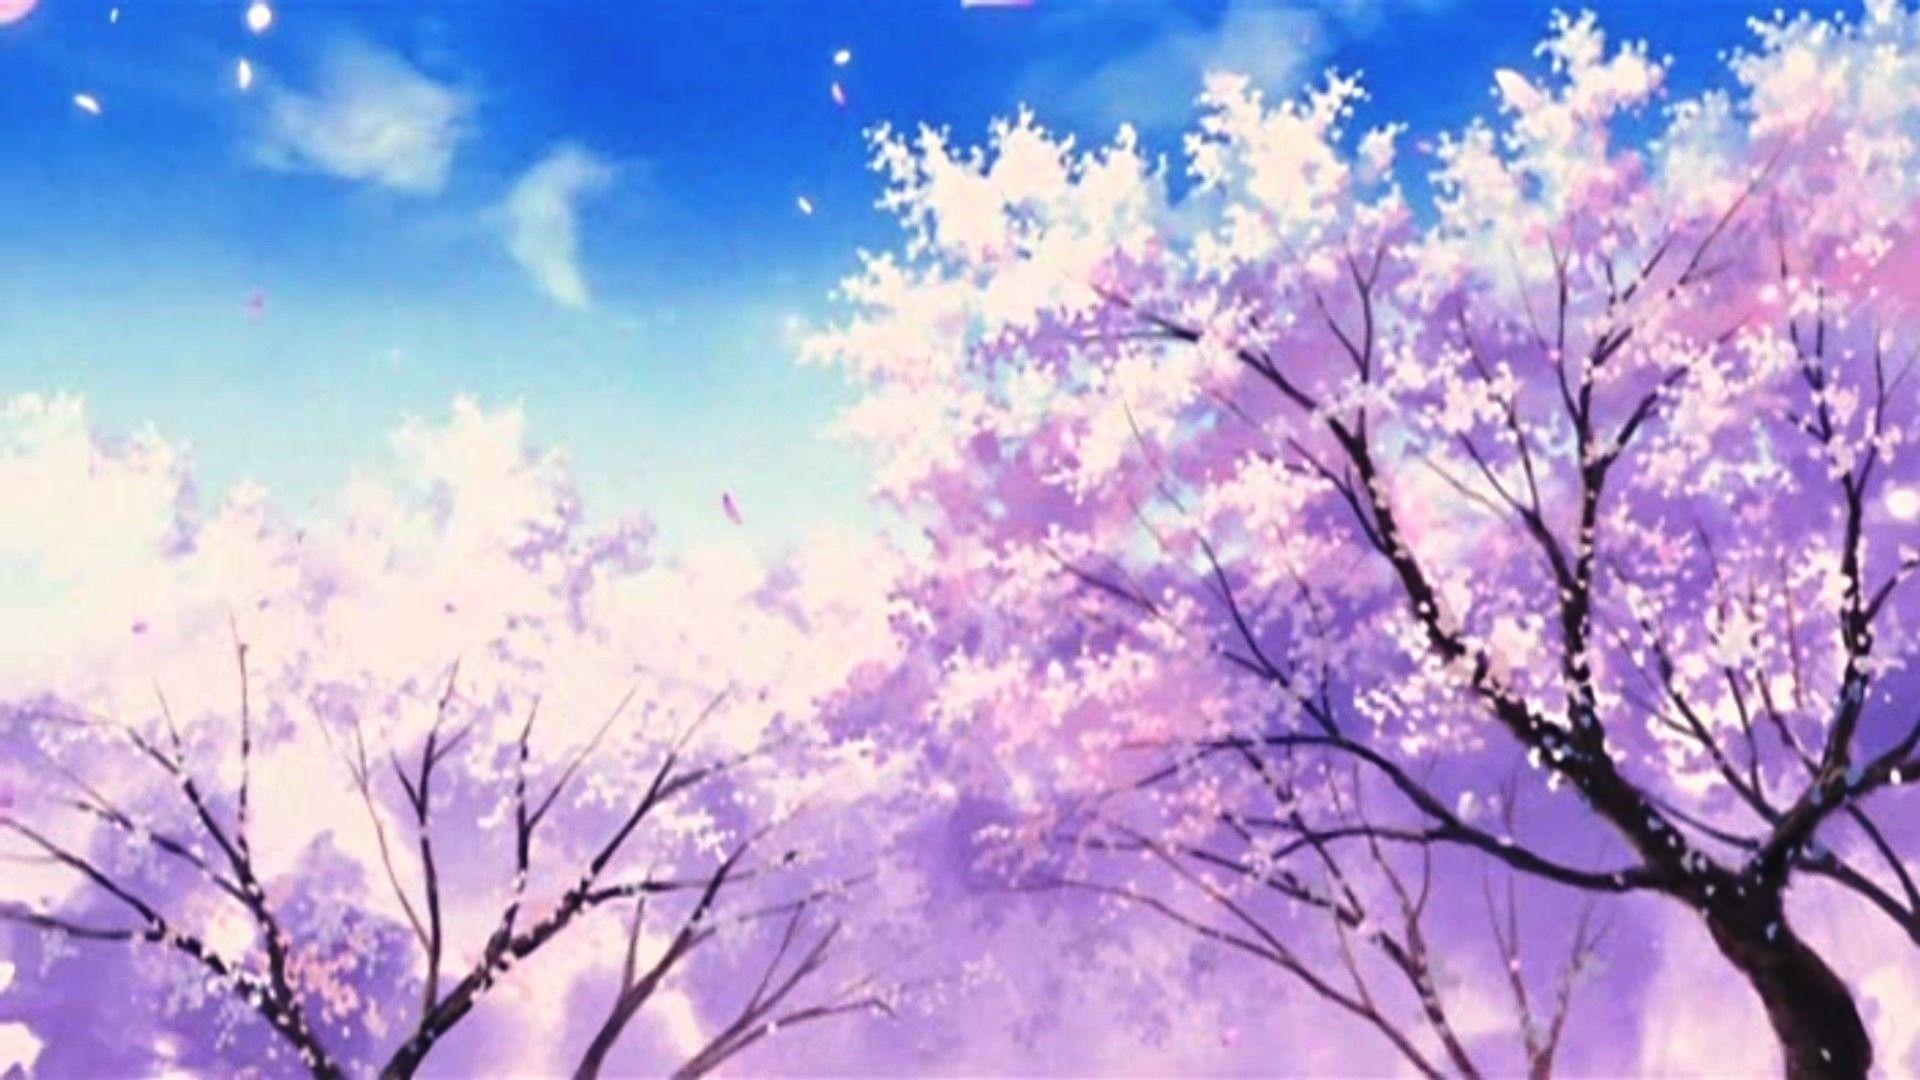 Anime Aesthetic Tumblr Desktop Wallpapers Top Free Anime Aesthetic Tumblr Desktop Backgrounds Wallpaperaccess